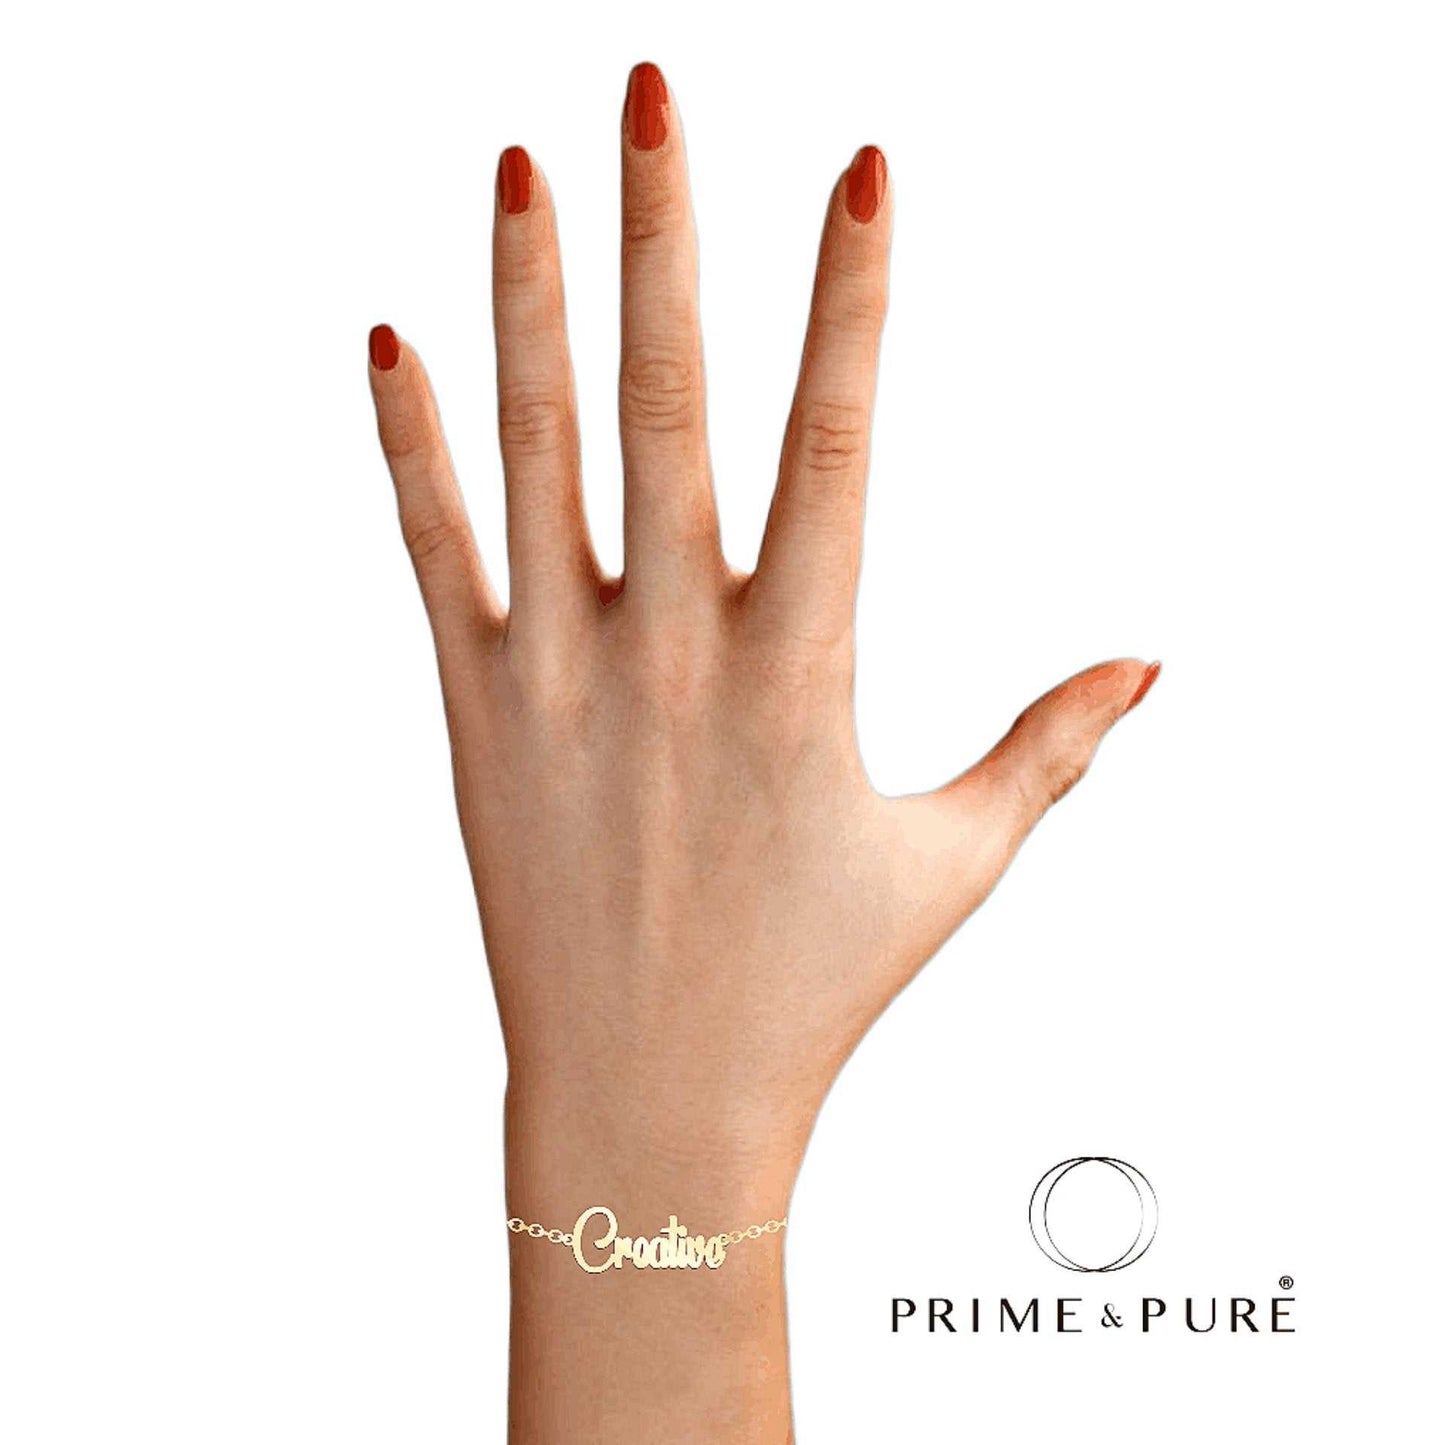 Beauty Name Bracelet - Prime & Pure